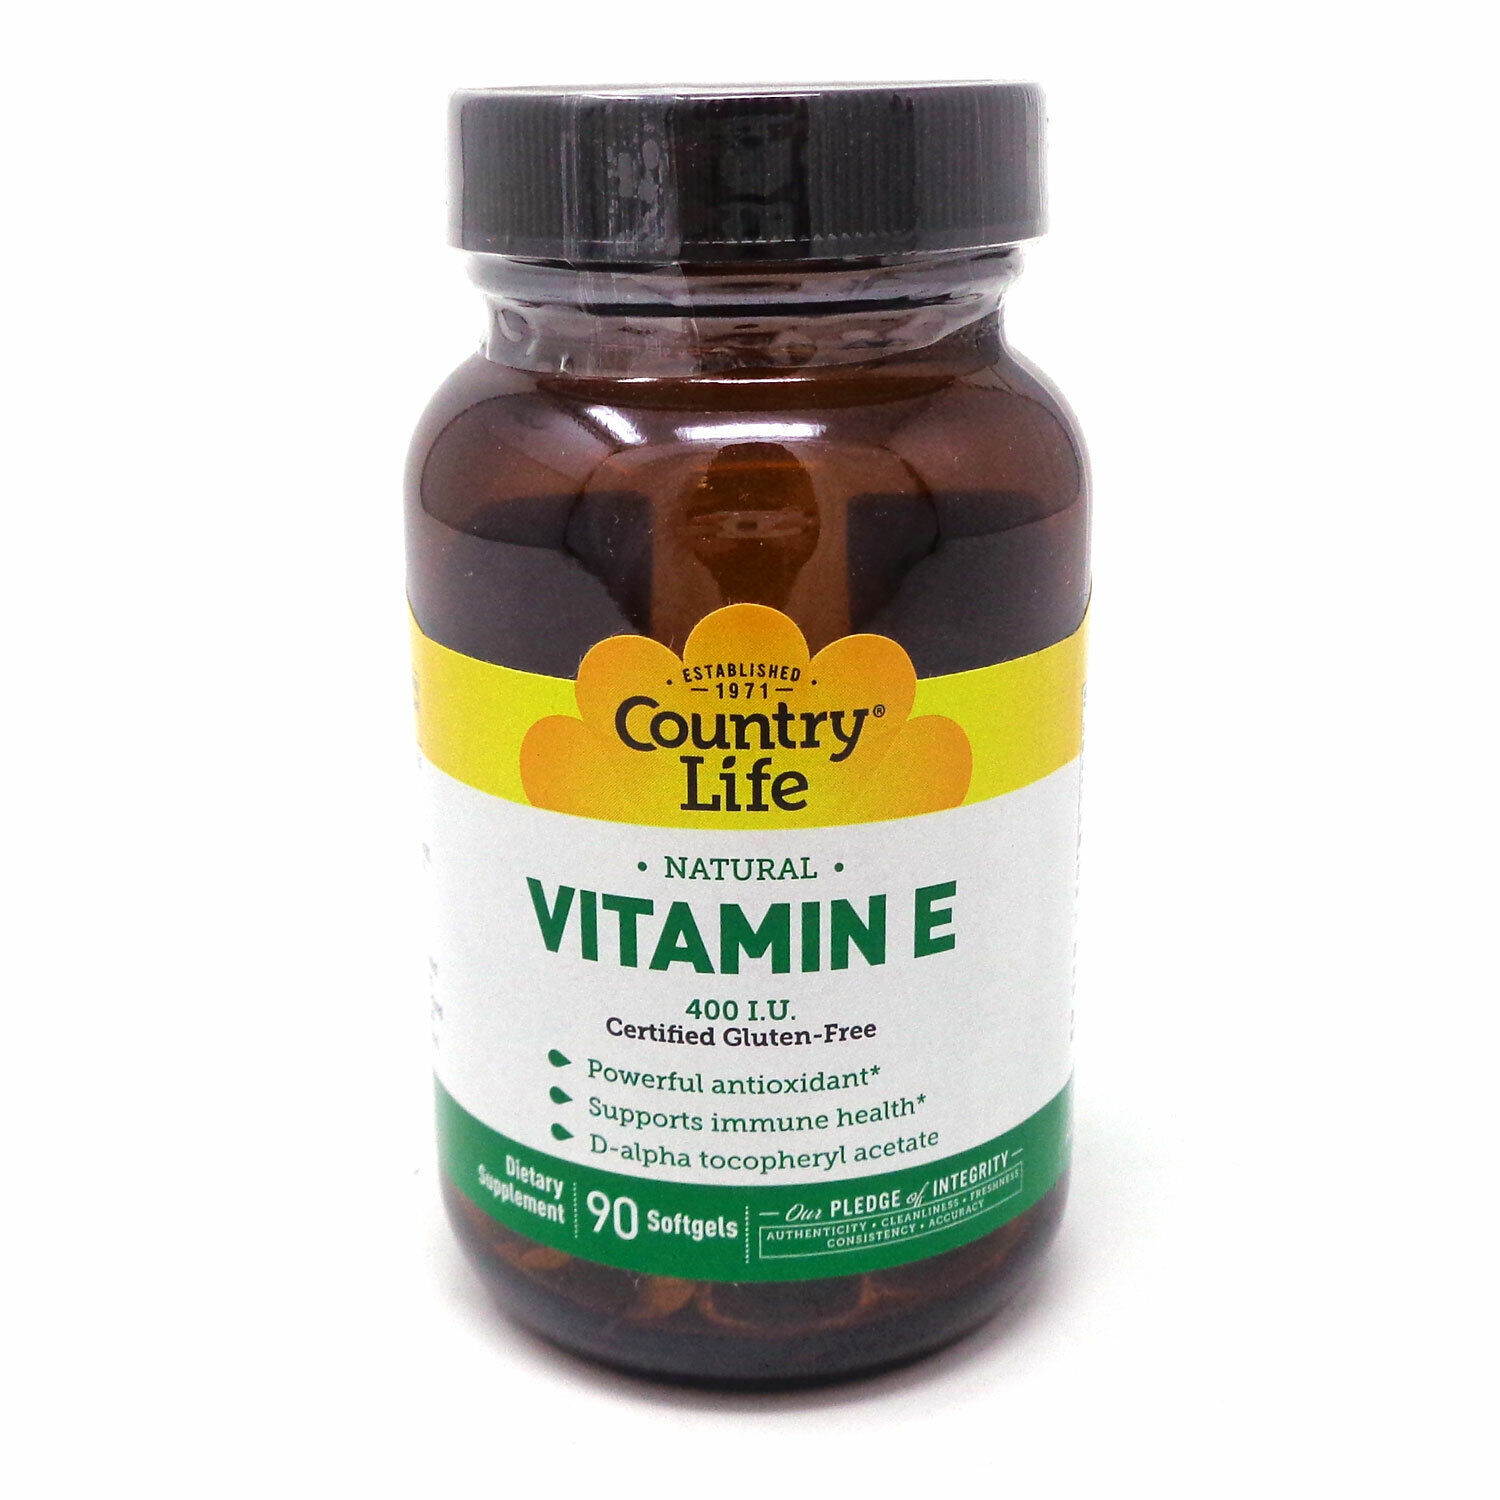 Country Life Vitamin E 400 iu - 90 Softgels